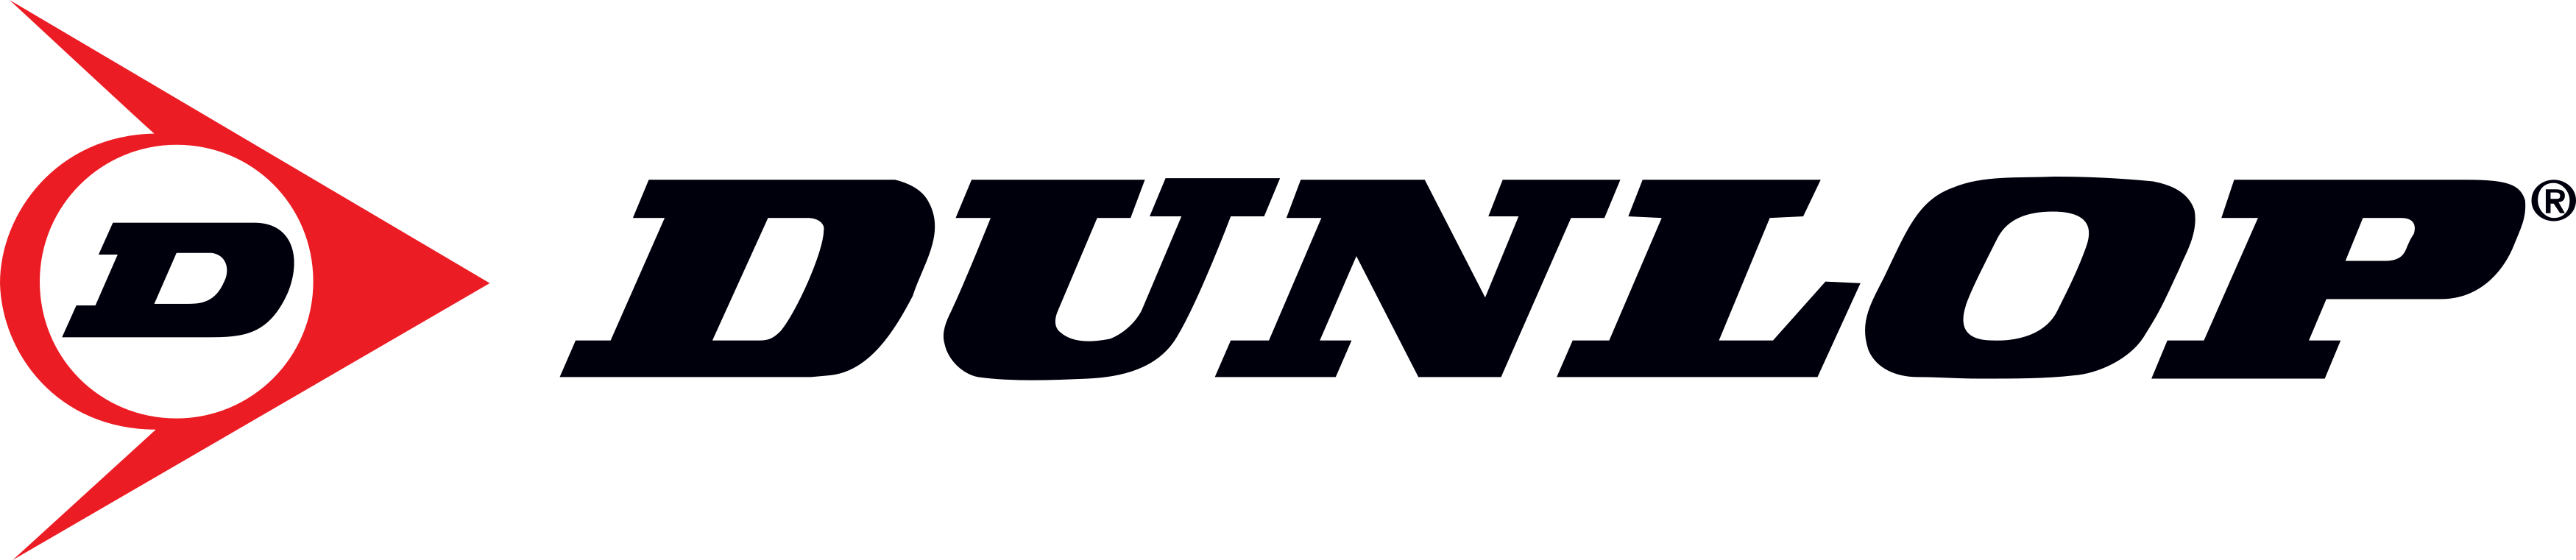 talleralejandrofornos-dunlop-logo